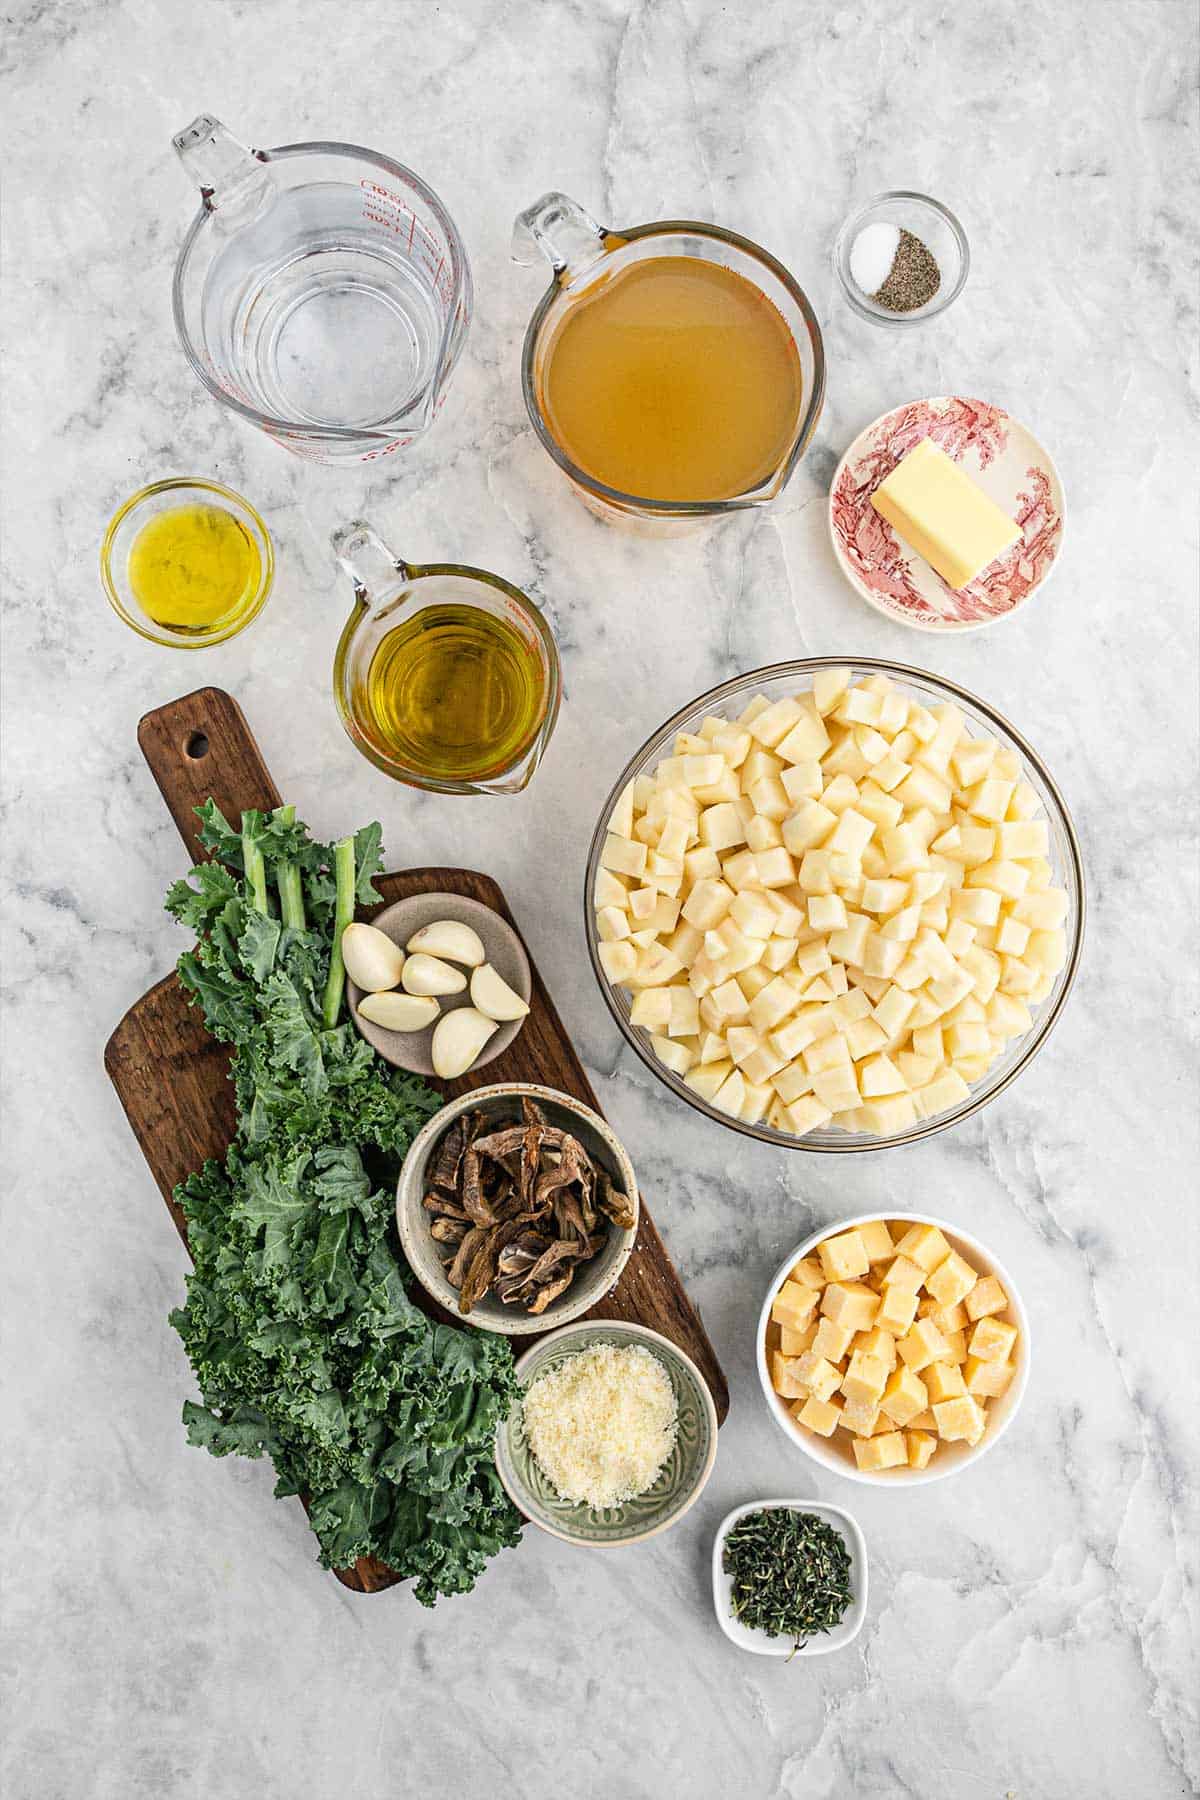 Ingredients to make kale potato soup on the table.